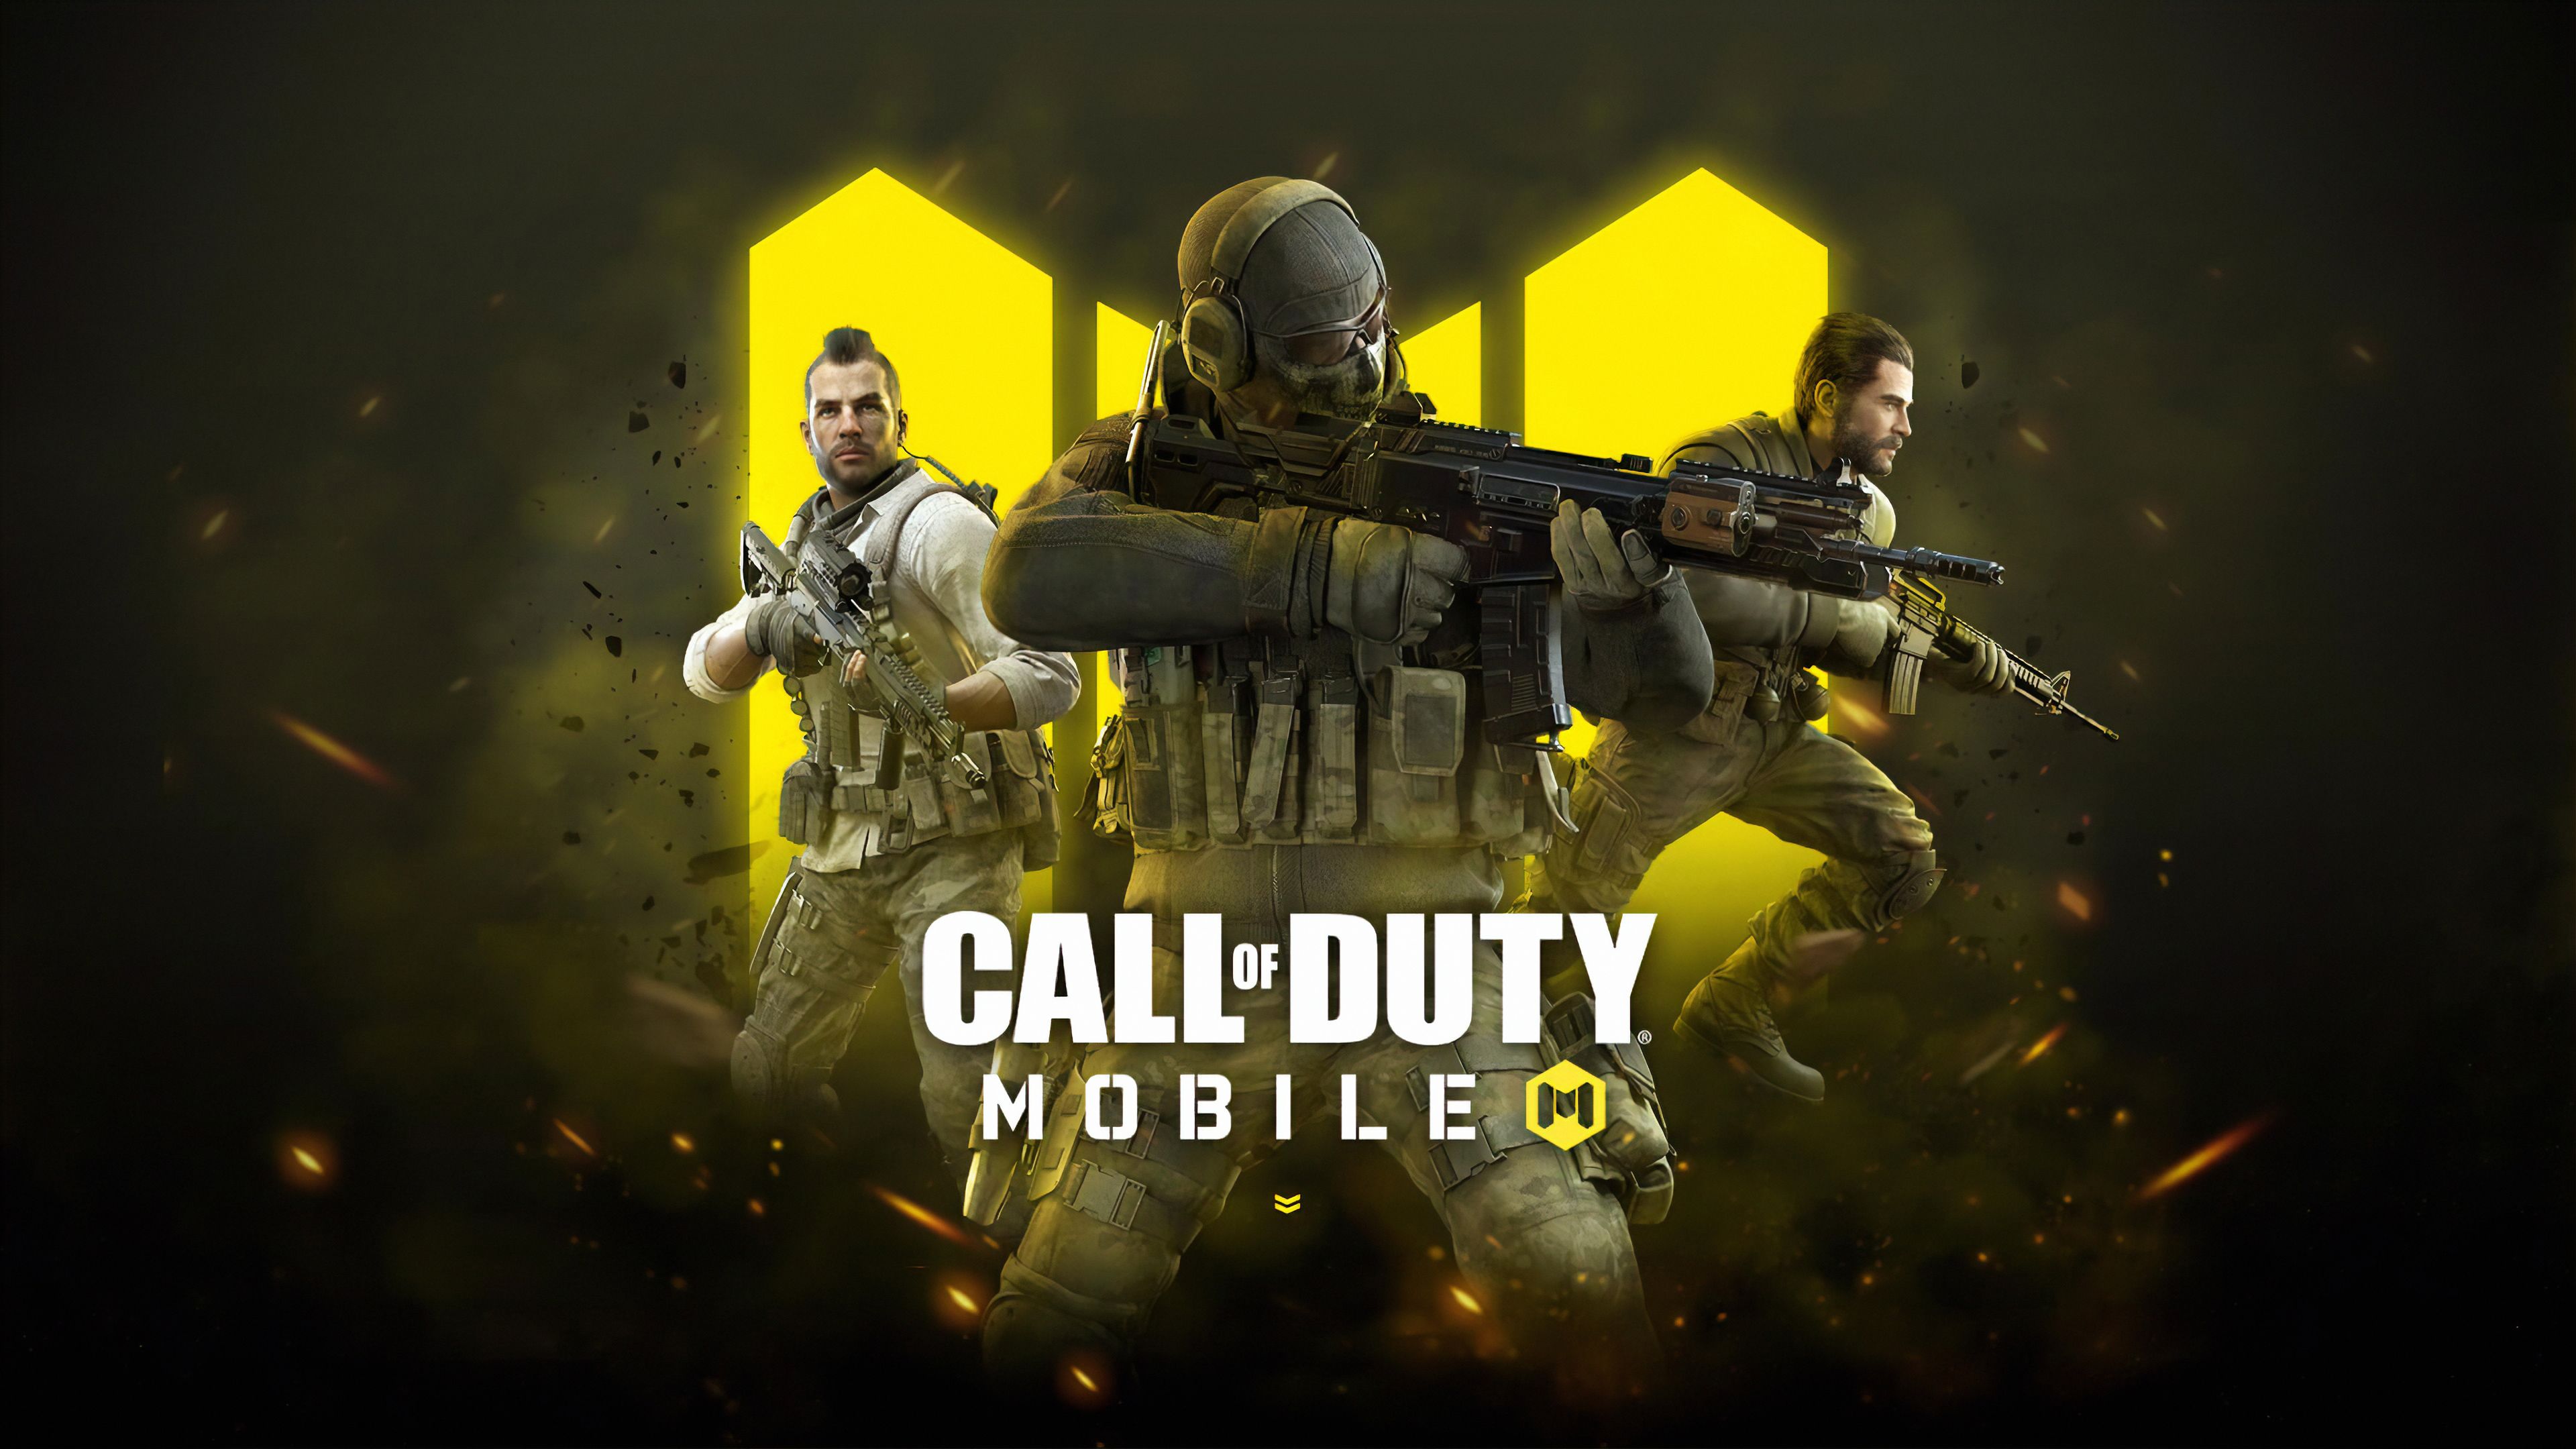 Wallpaper 4k Call Of Duty Mobile 2019 2019 Games Wallpaper, 4k Wallpaper, Call Of Duty Mobile Wallpaper, Call Of Duty Wallpaper, Games Wallpaper, Hd Wallpaper, Mobile Wallpaper